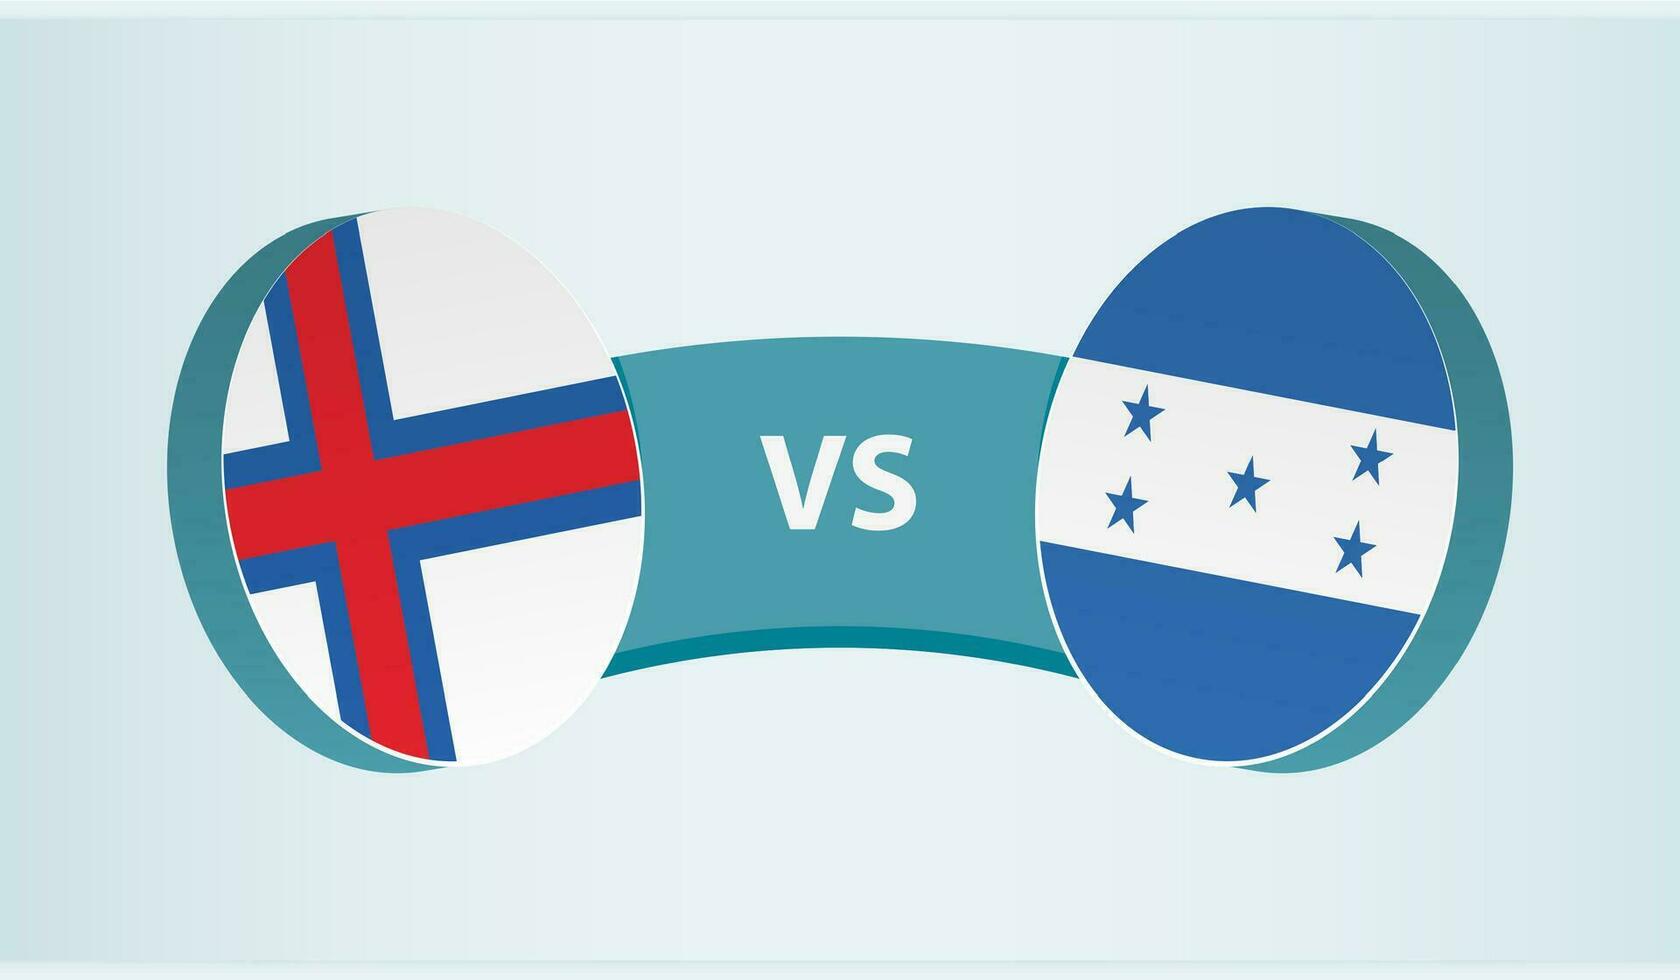 Faroe Islands versus Honduras, team sports competition concept. vector